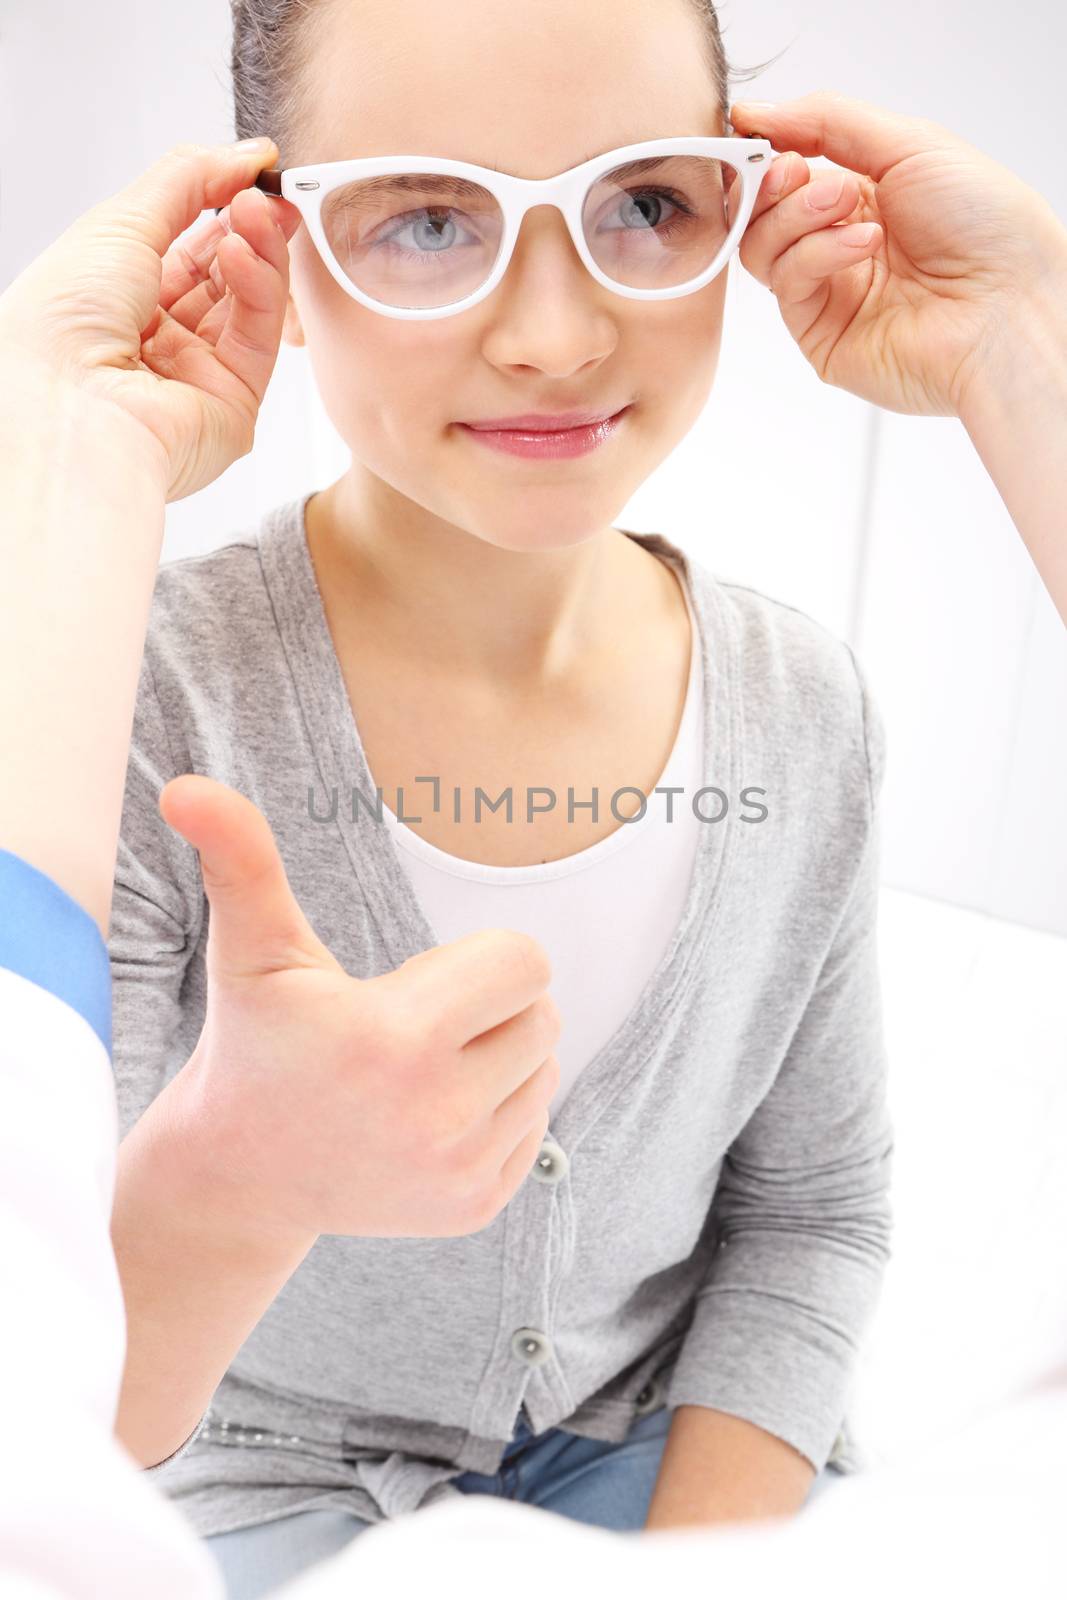 Child an ophthalmologist by robert_przybysz